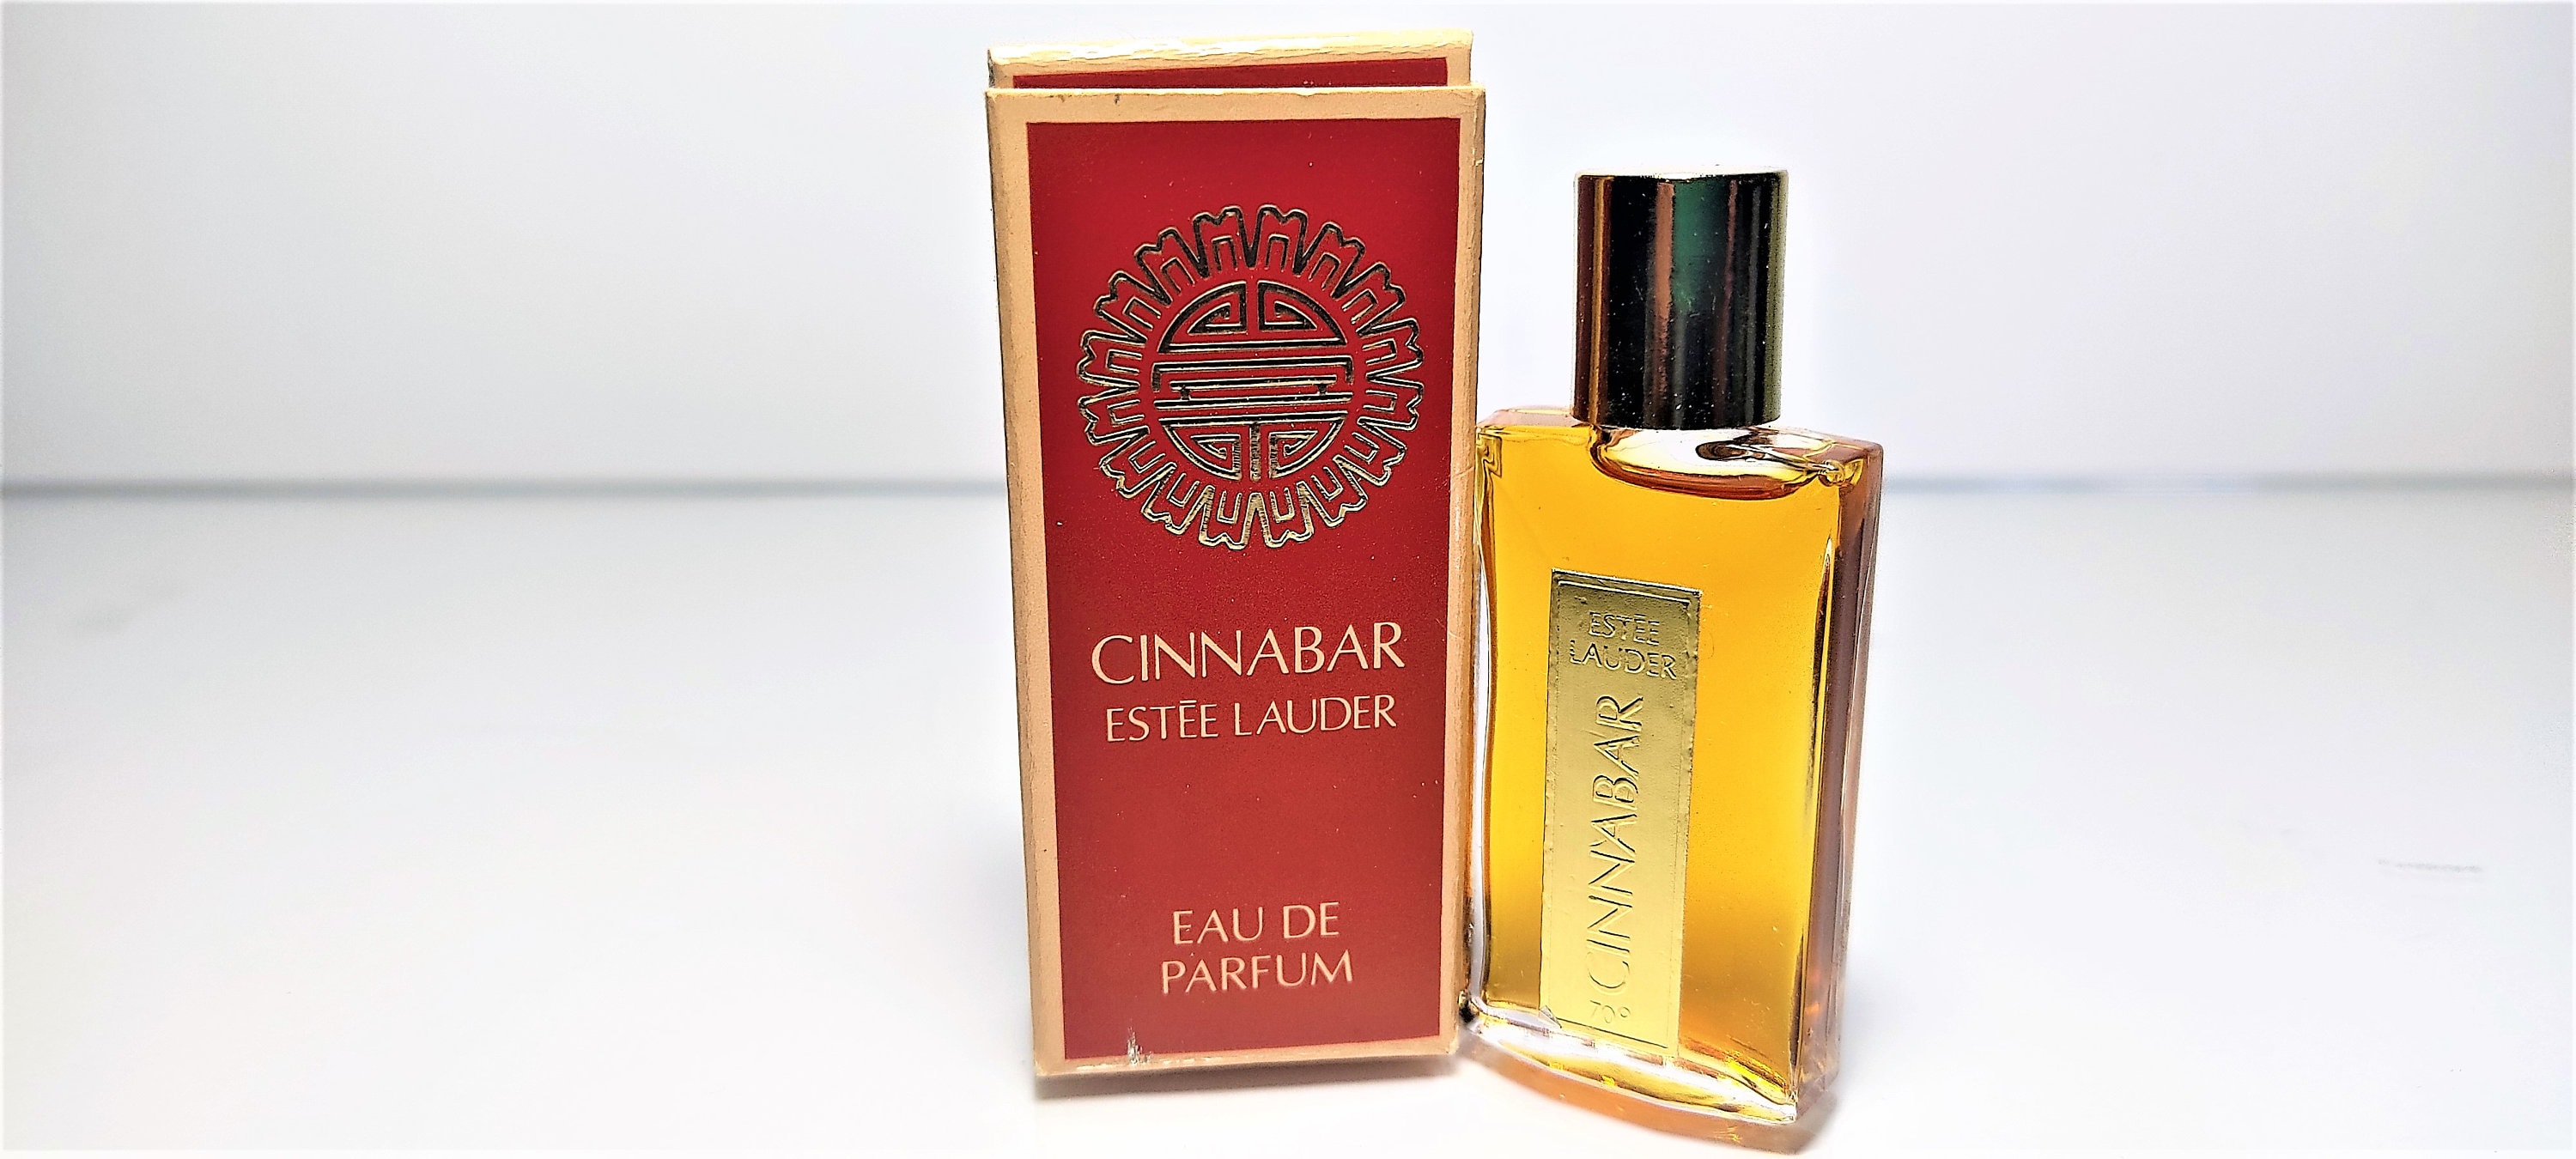 Cinnabar Estēe Lauder 1978 Eau de PARFUM 75 ml parfum - Etsy 日本